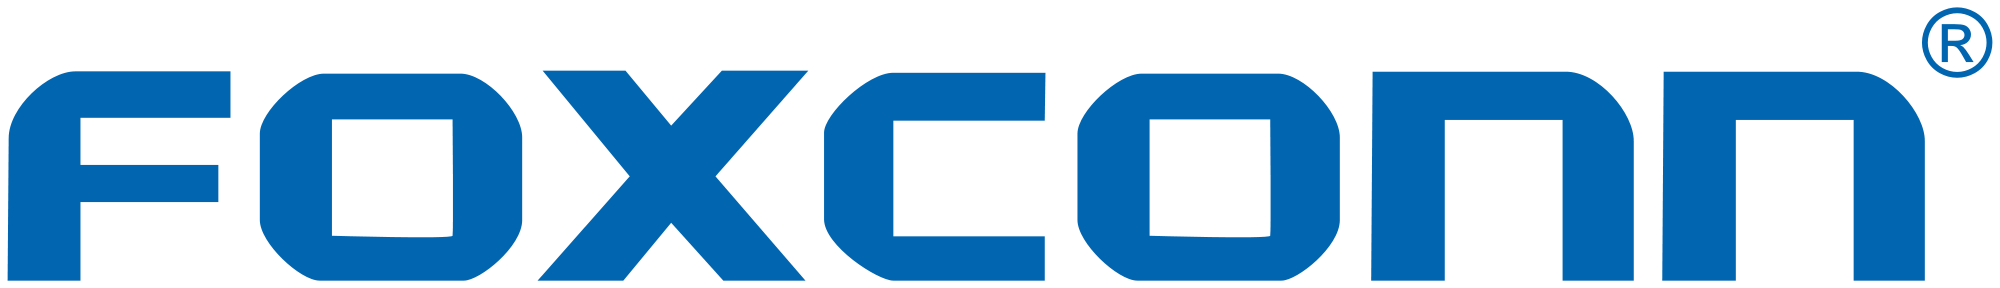 Foxconn Logo - File:Foxconn logo.svg - Wikimedia Commons